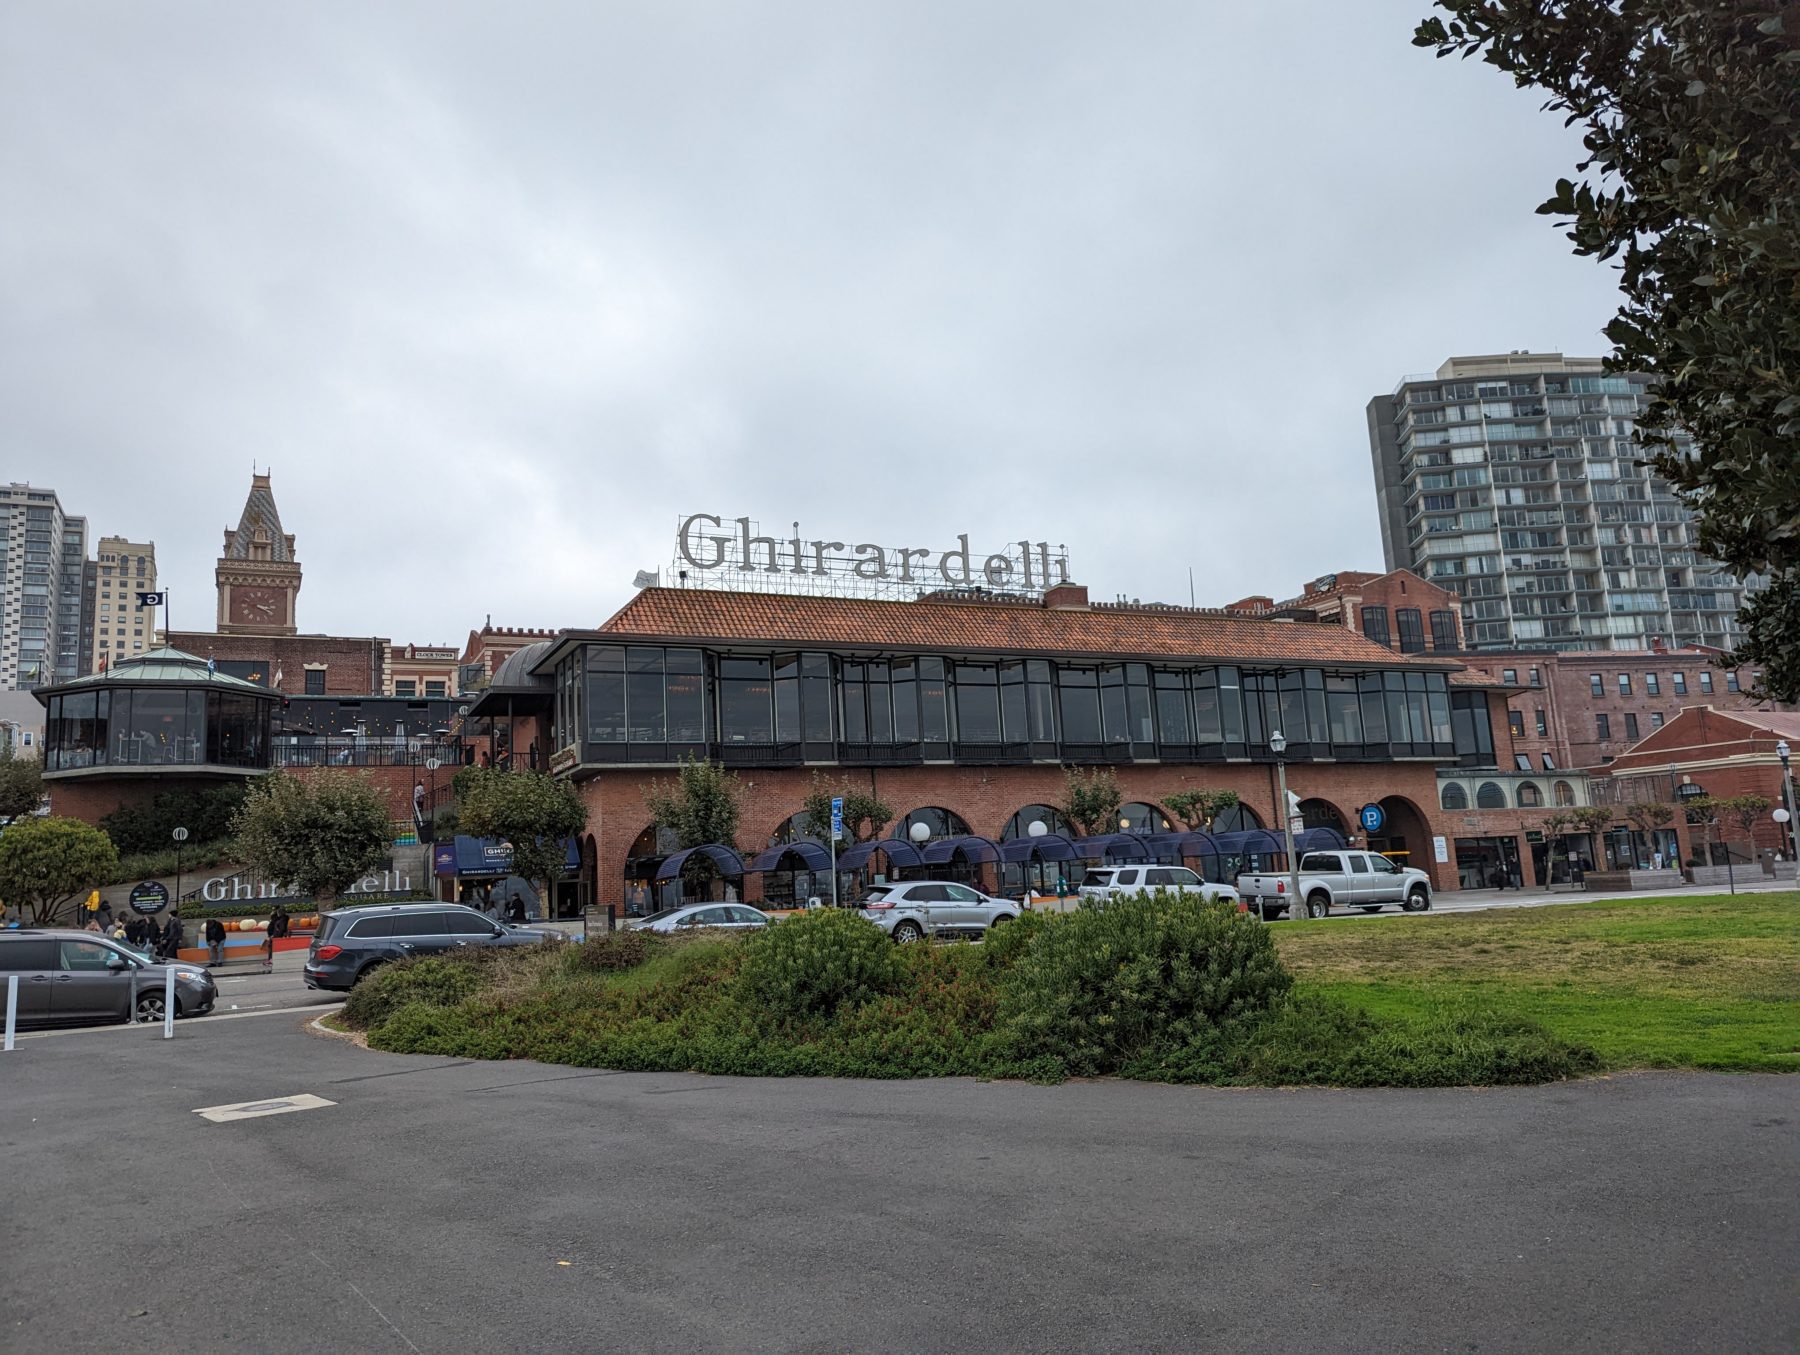 Visit Ghirardelli factory tour